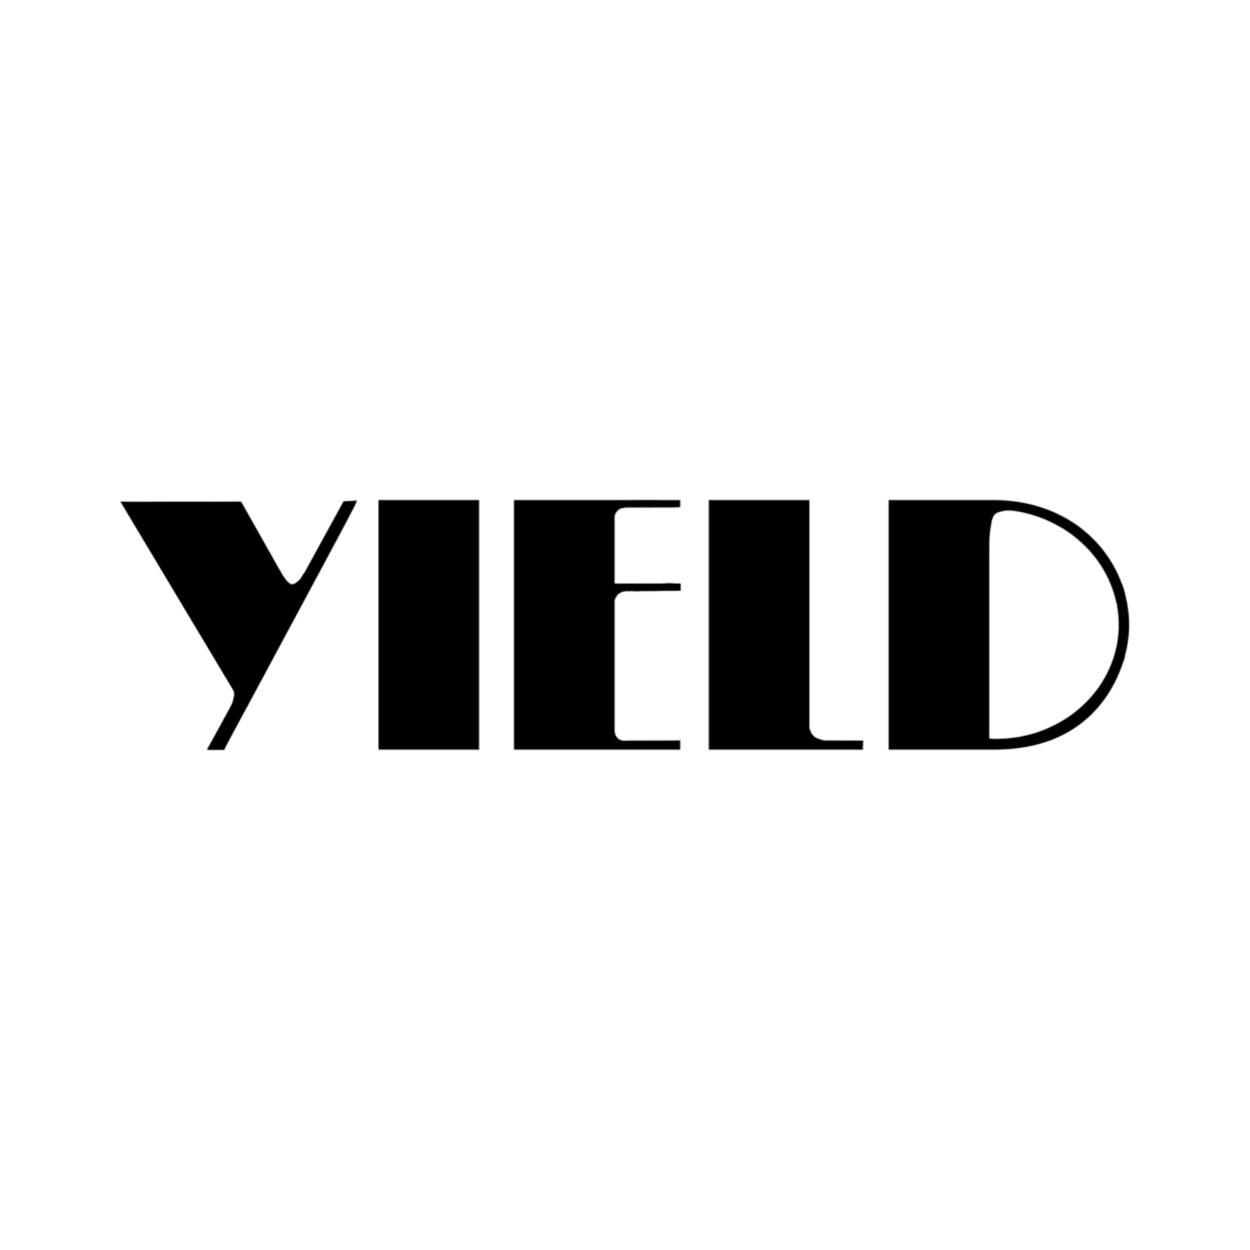 1250-x-1250-logo-yield.jpg